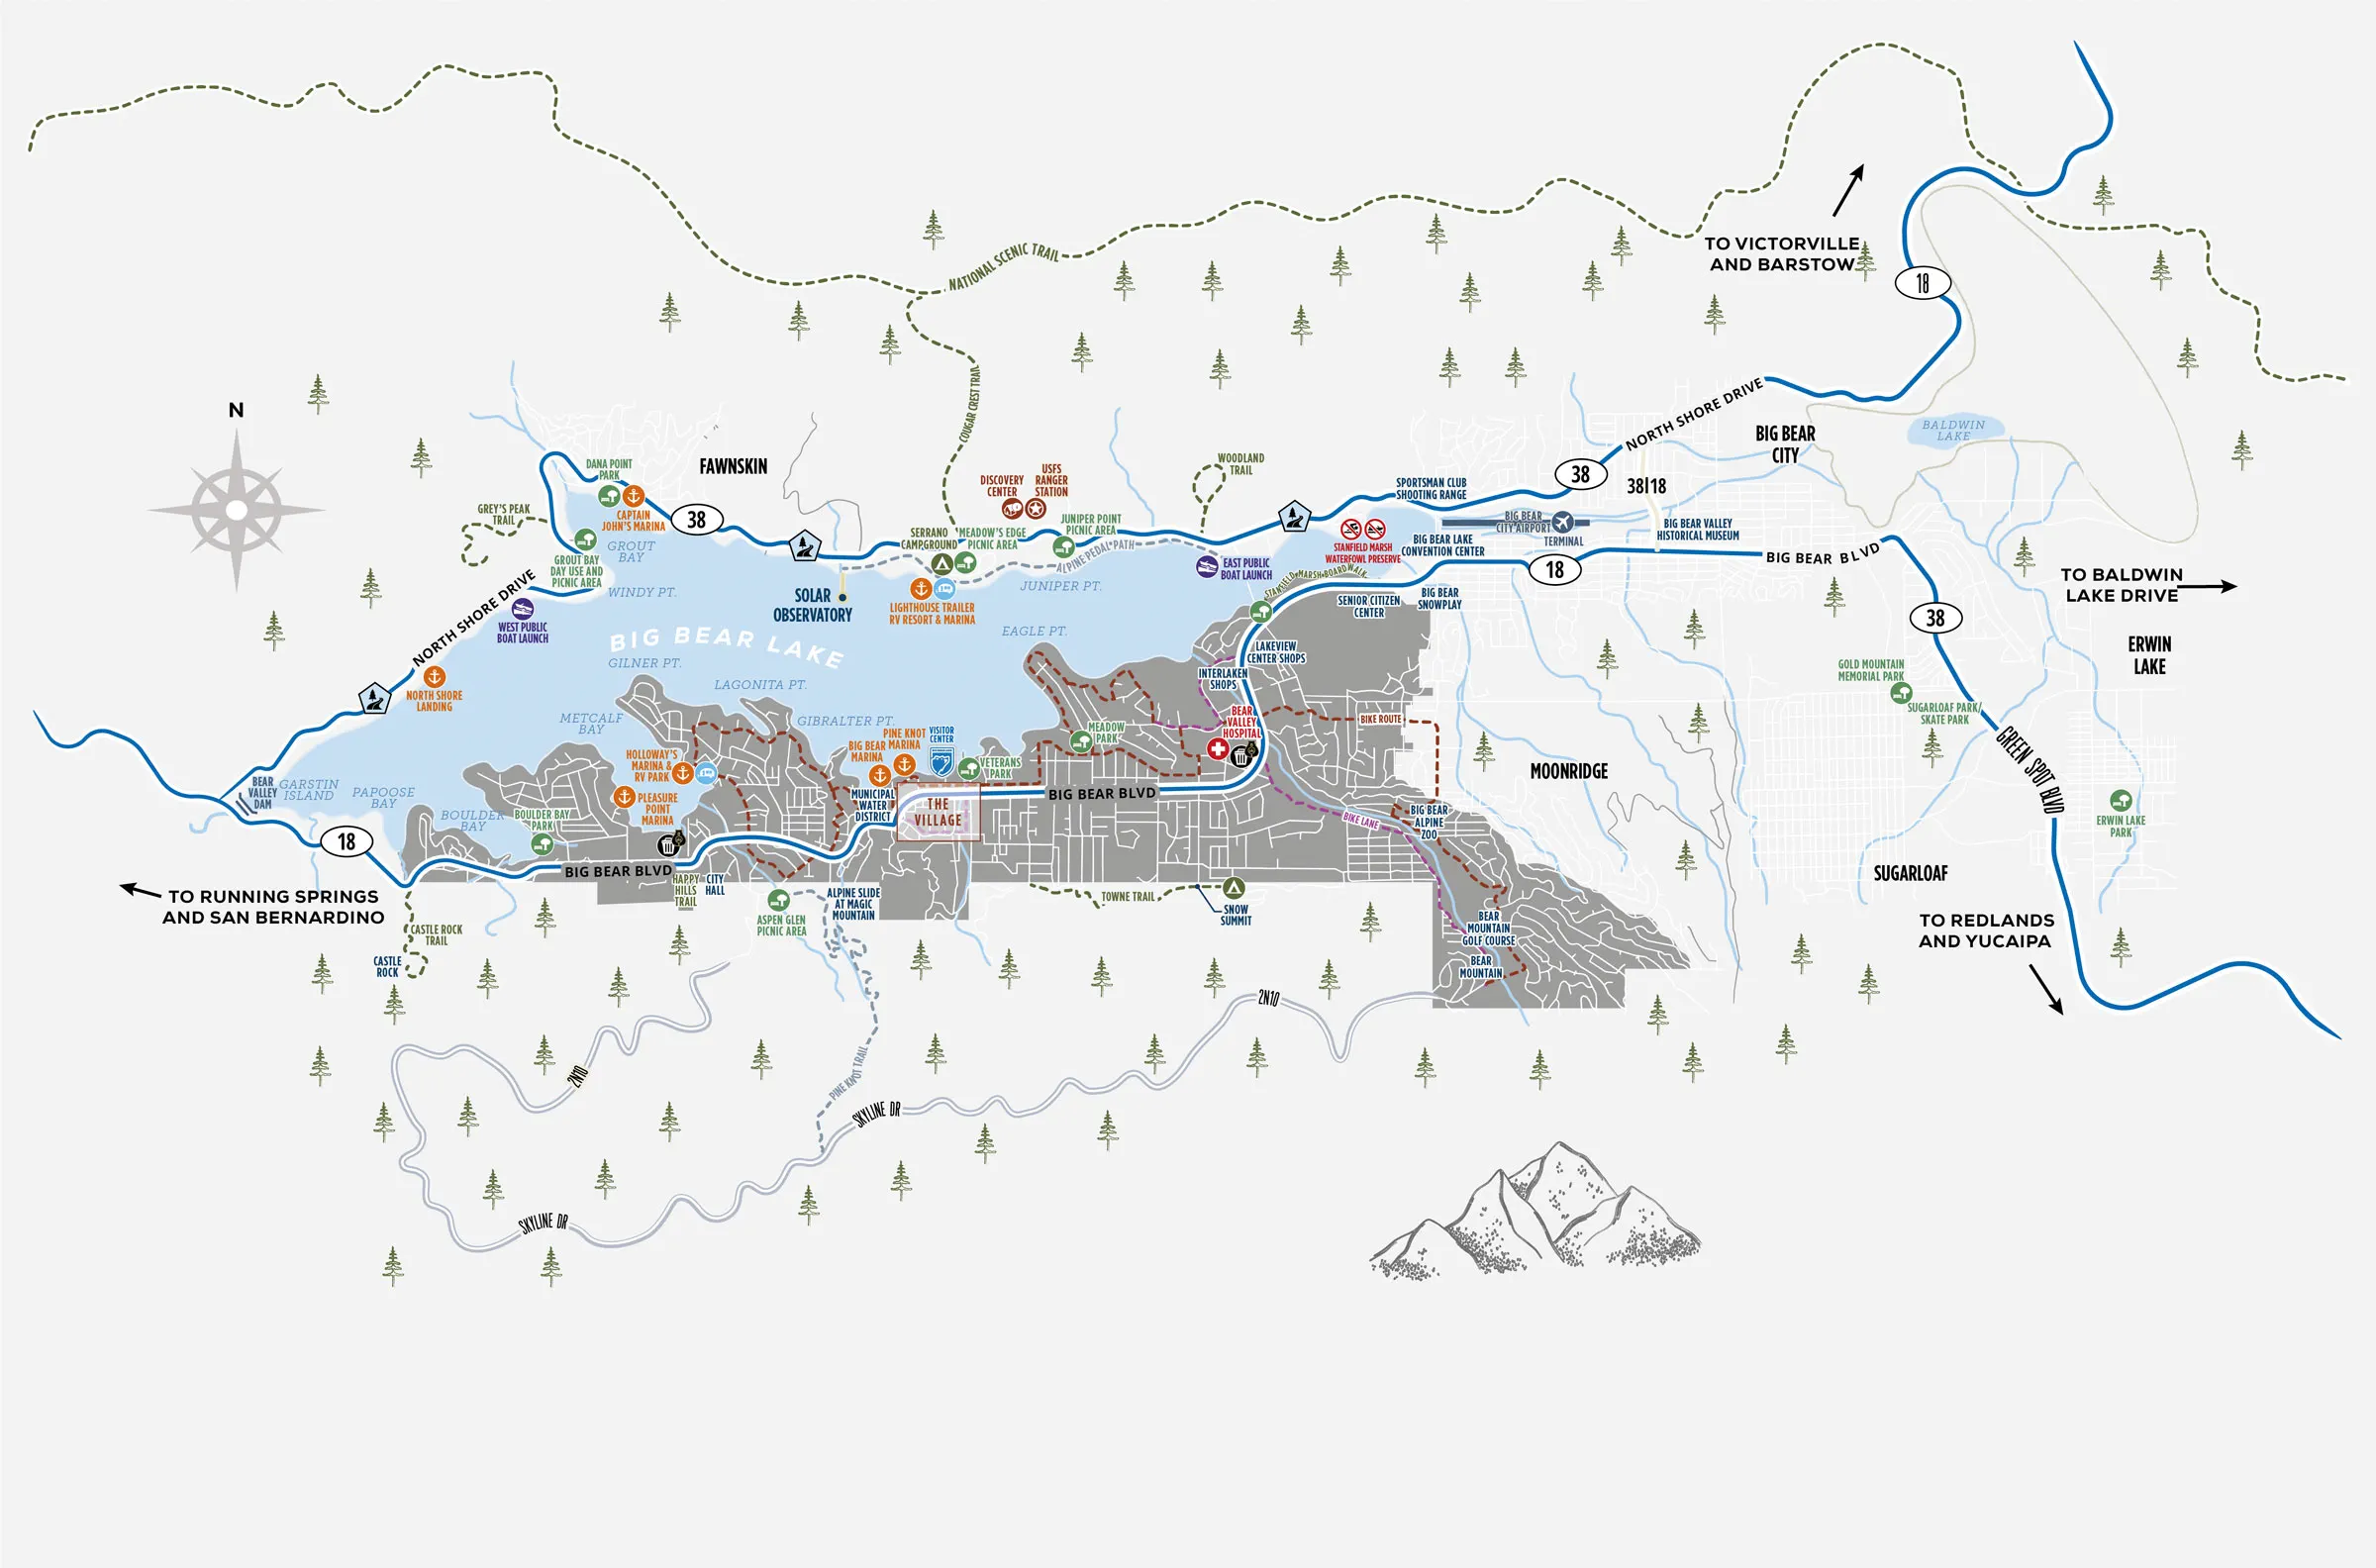 Bike path map for Big Bear Lake